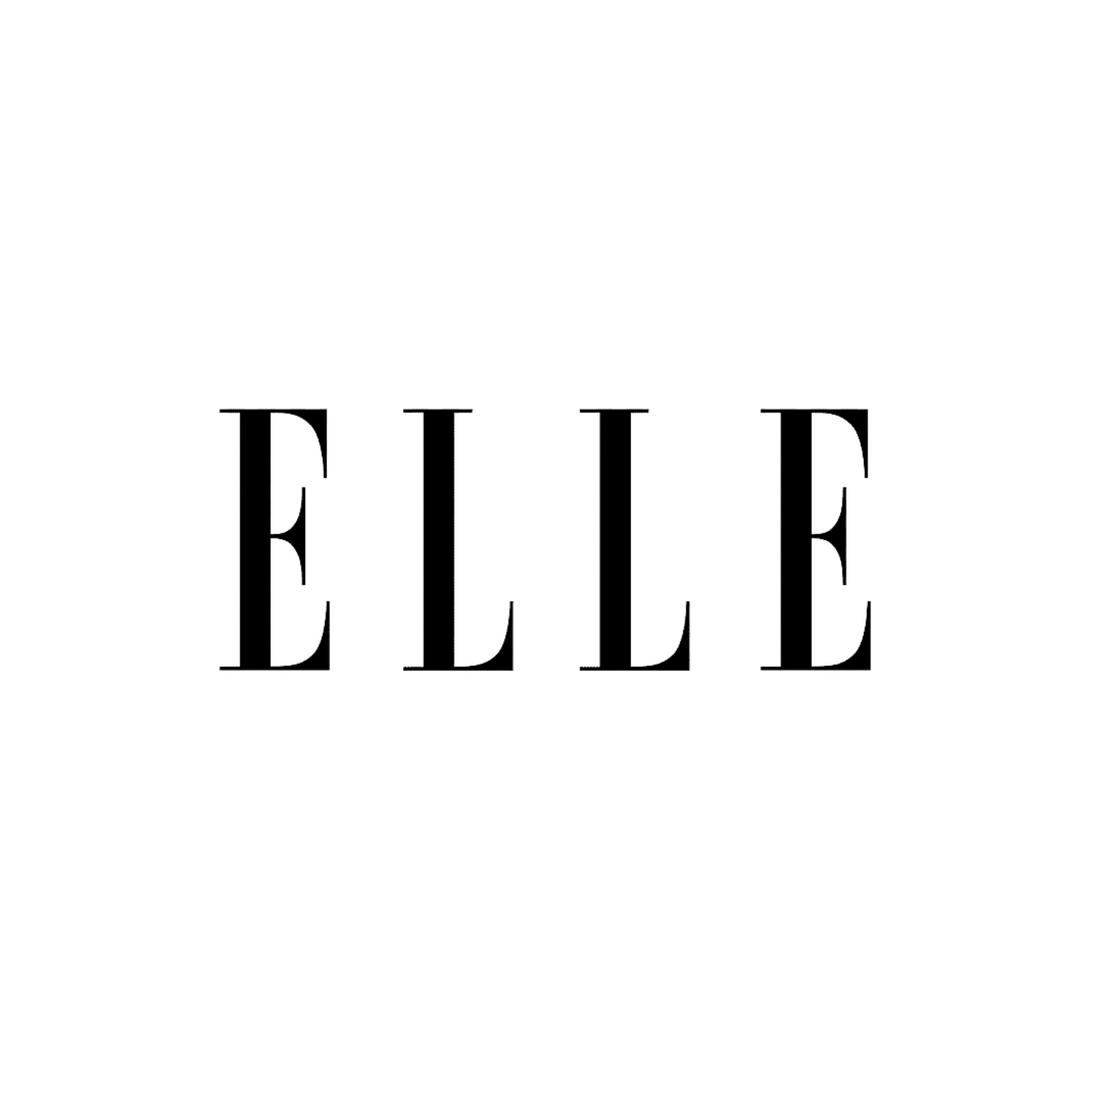 Elle.com: "These Dutch entrepreneurs will change your views on sex"